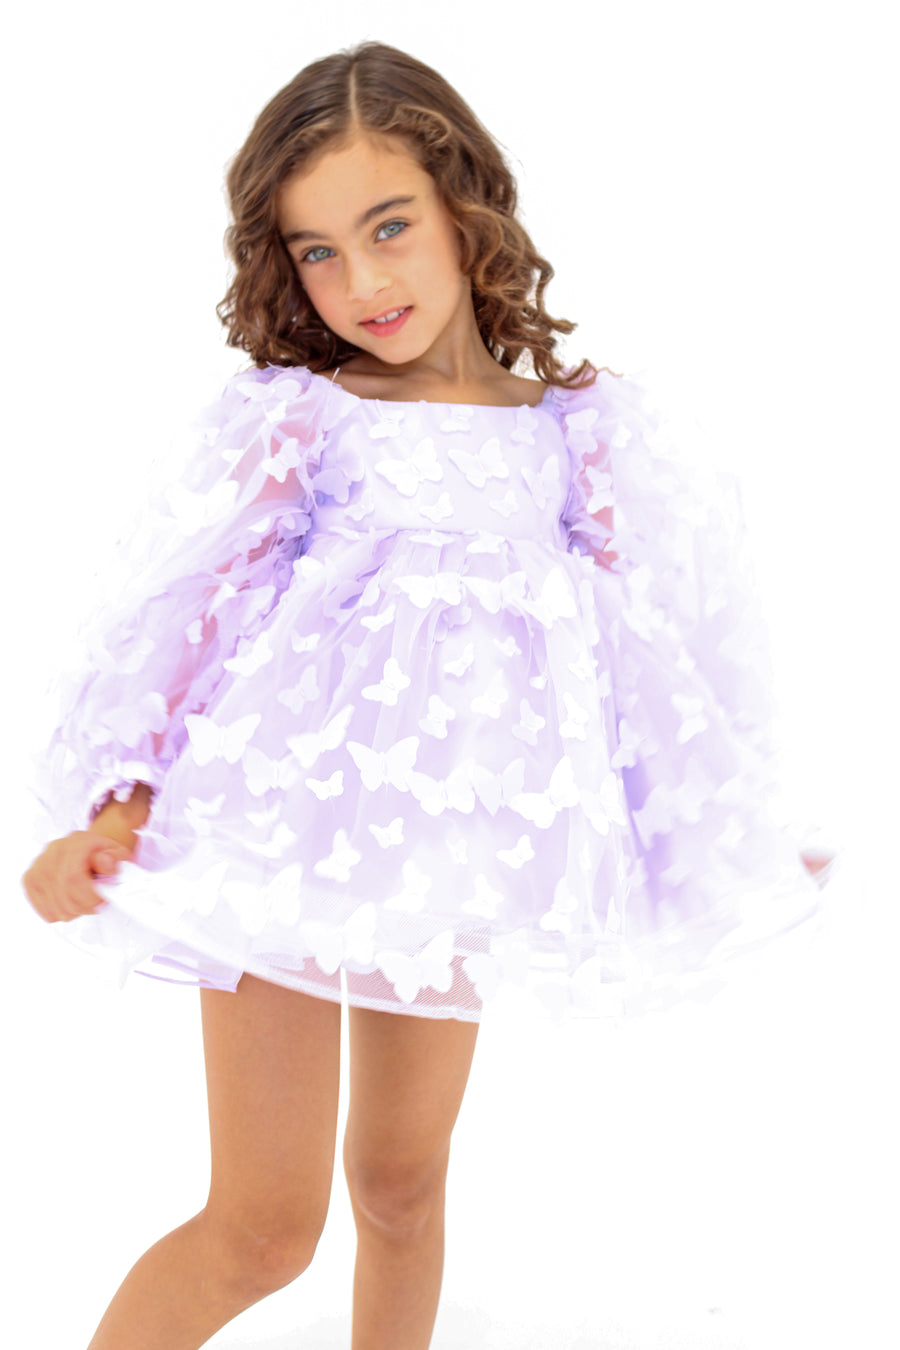 Lunar Lavender Butterfly Dress